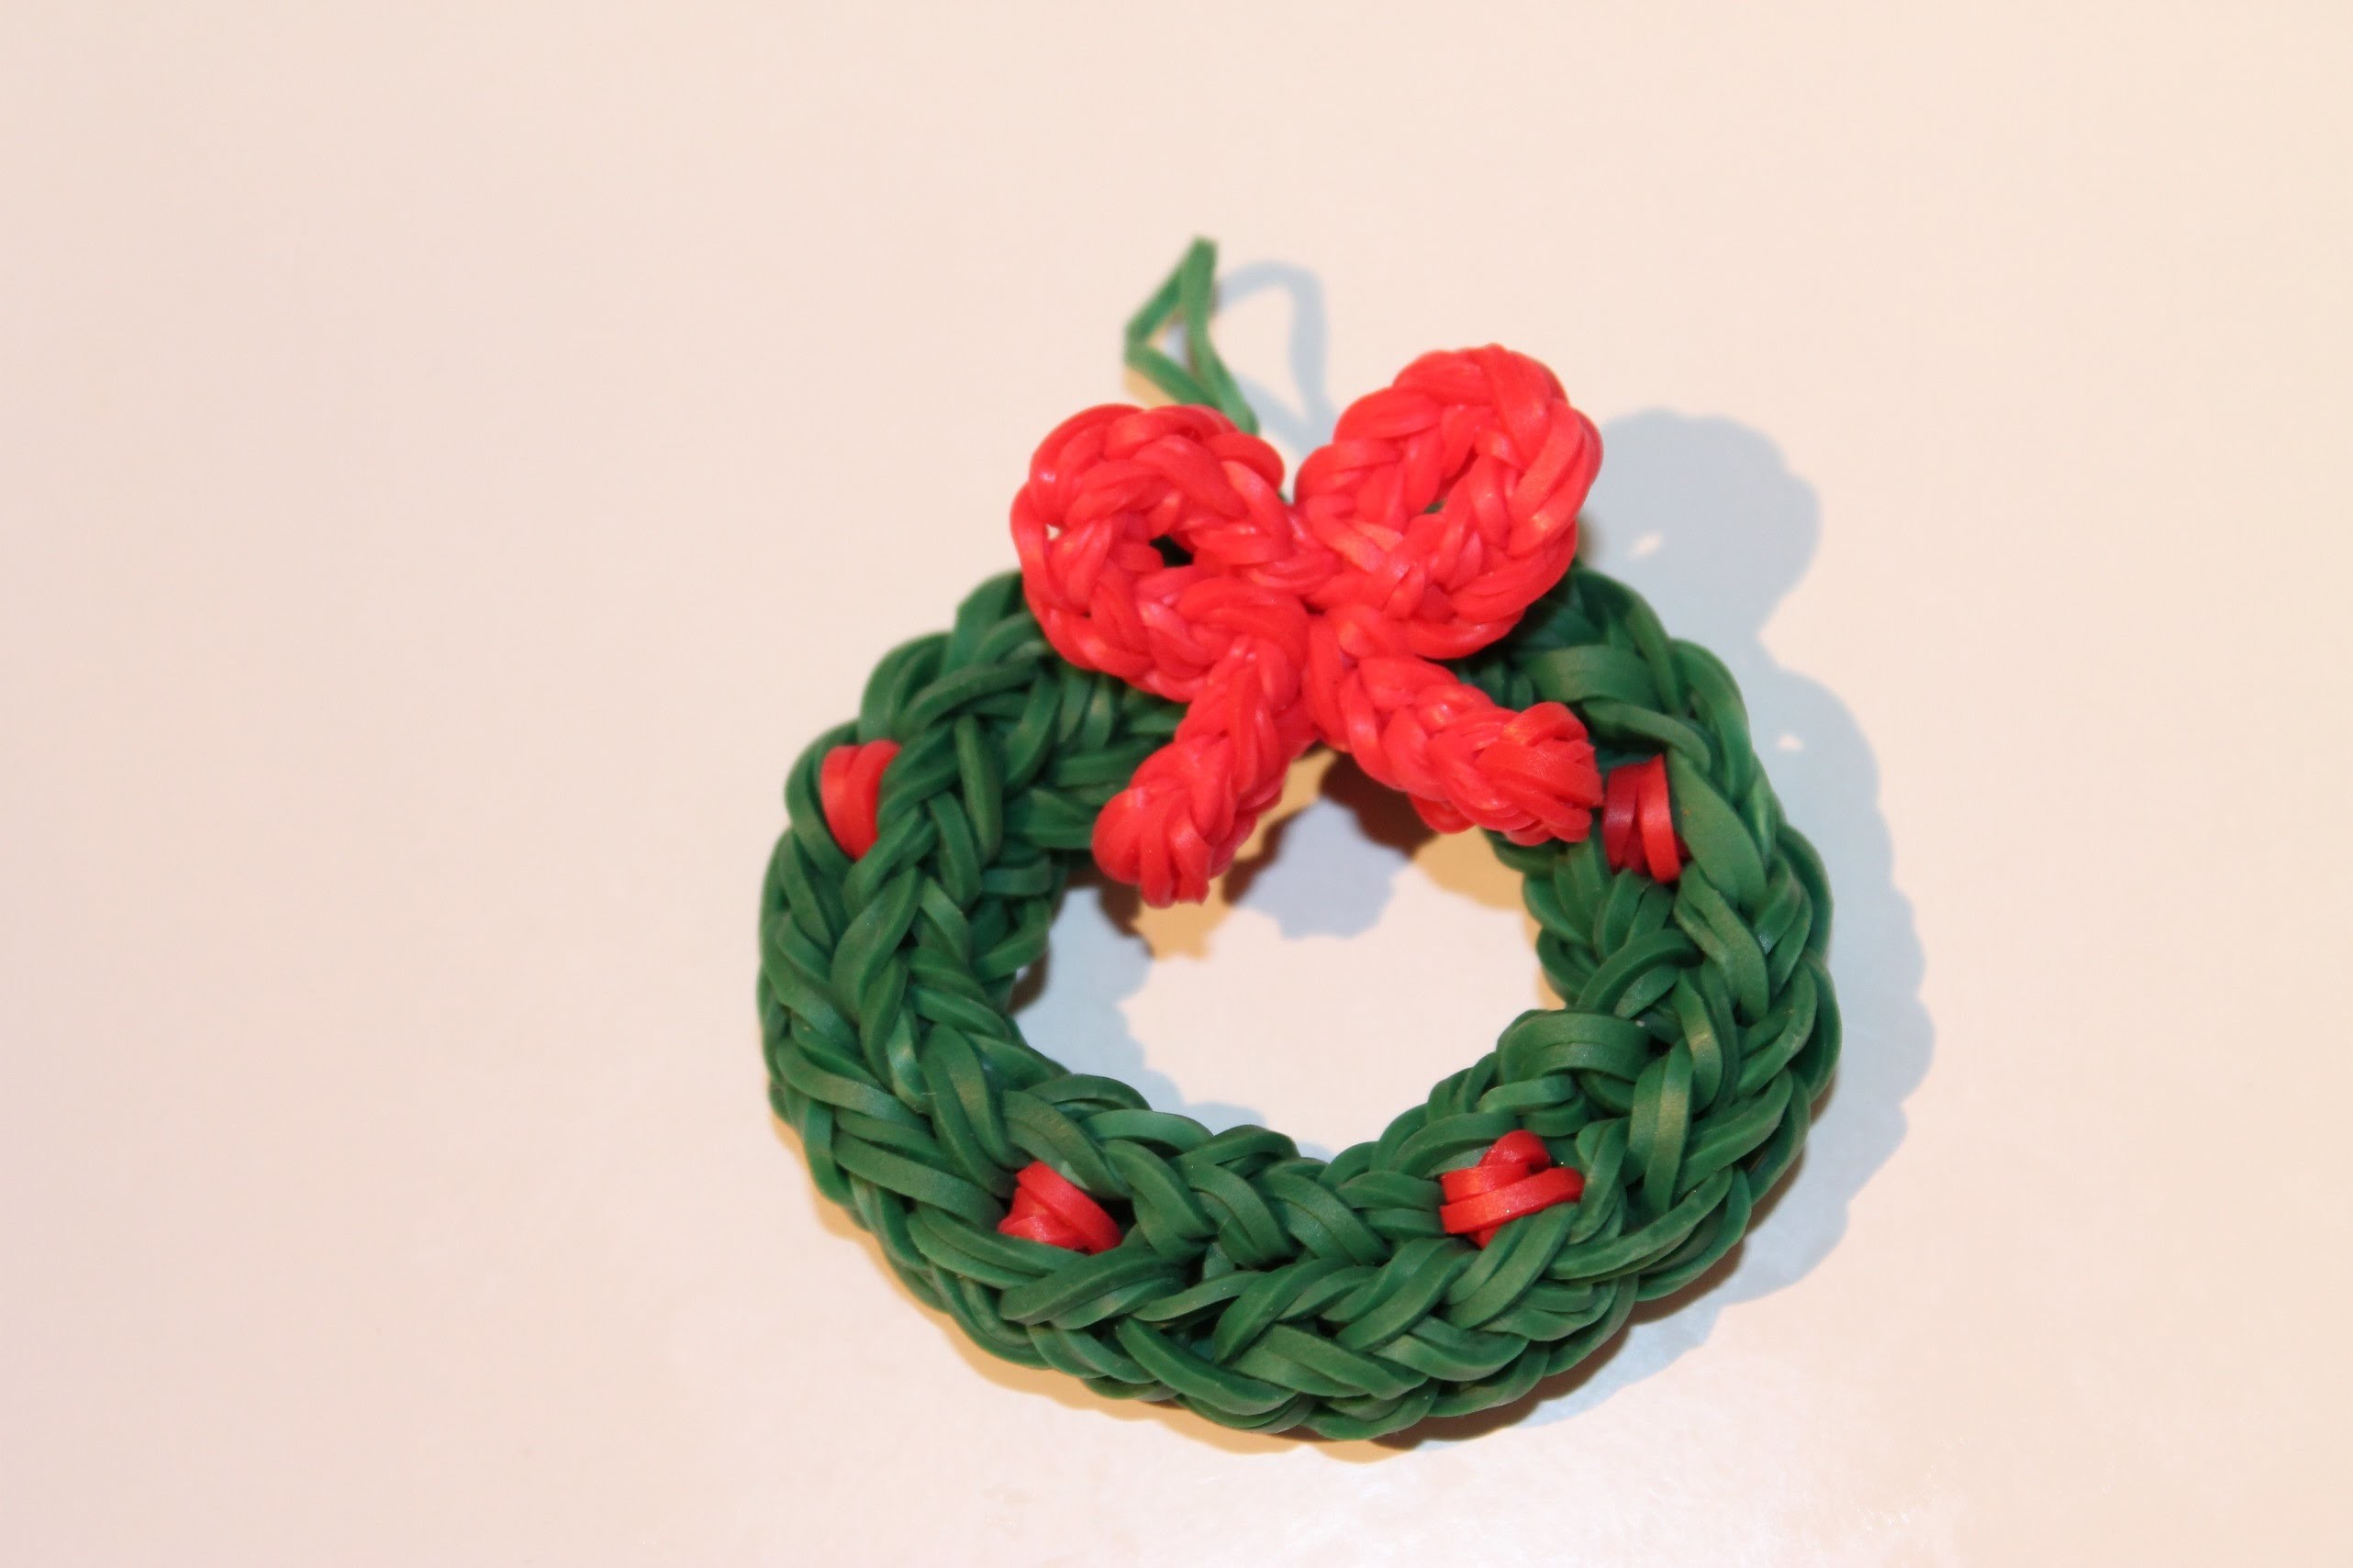 Rainbow Loom Nederlands, 3d kerstkrans, Xmas wreath, Original Design